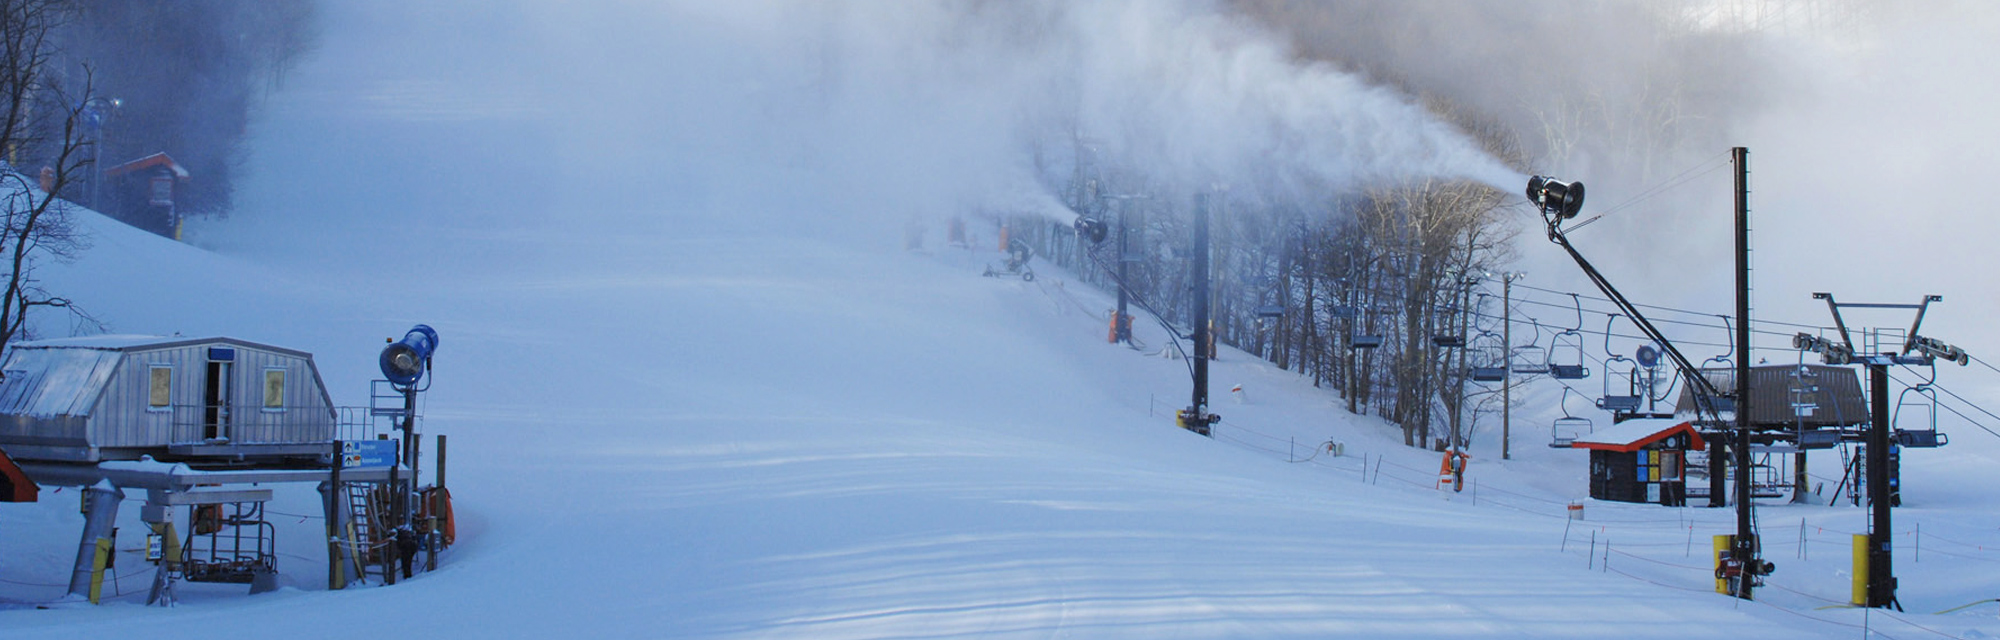 https://appskimtn.com/wp-content/uploads/2020/11/Appalachian-Ski-Mtn-Banner-Snowmaking-2.jpg